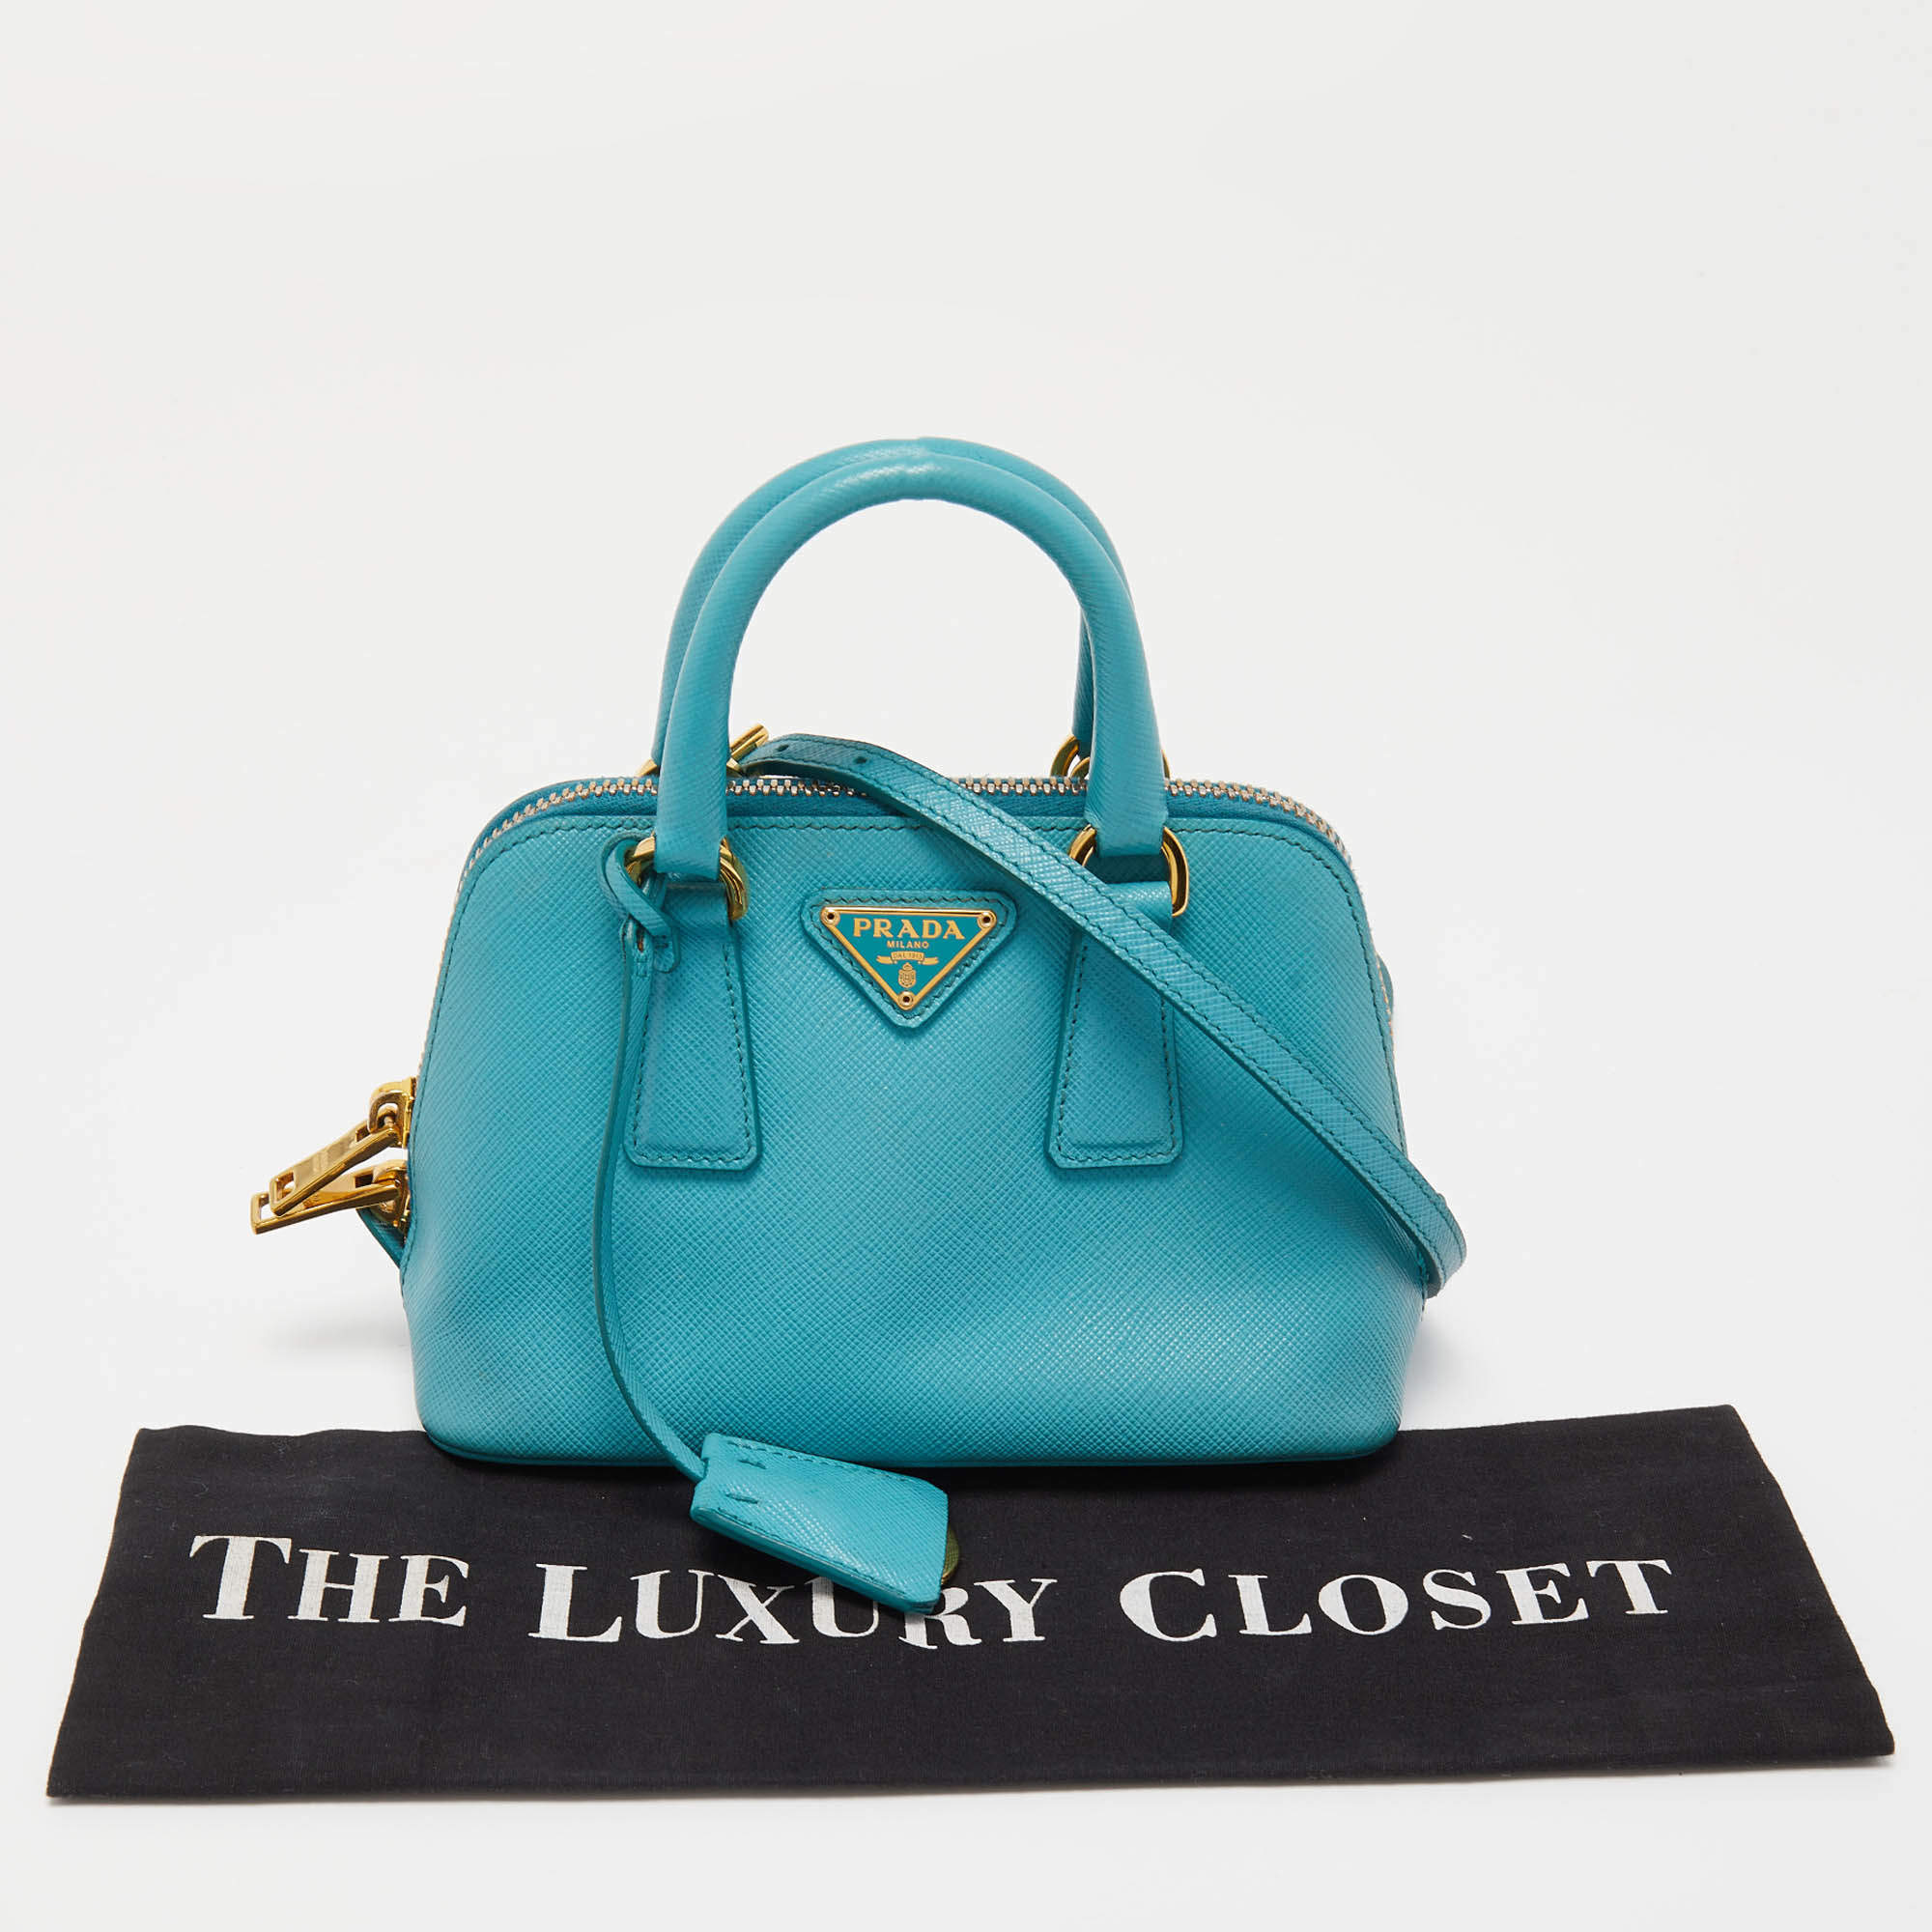 Prada Mini Promenade Teal Saffiano Leather Crossbody Bag – I MISS